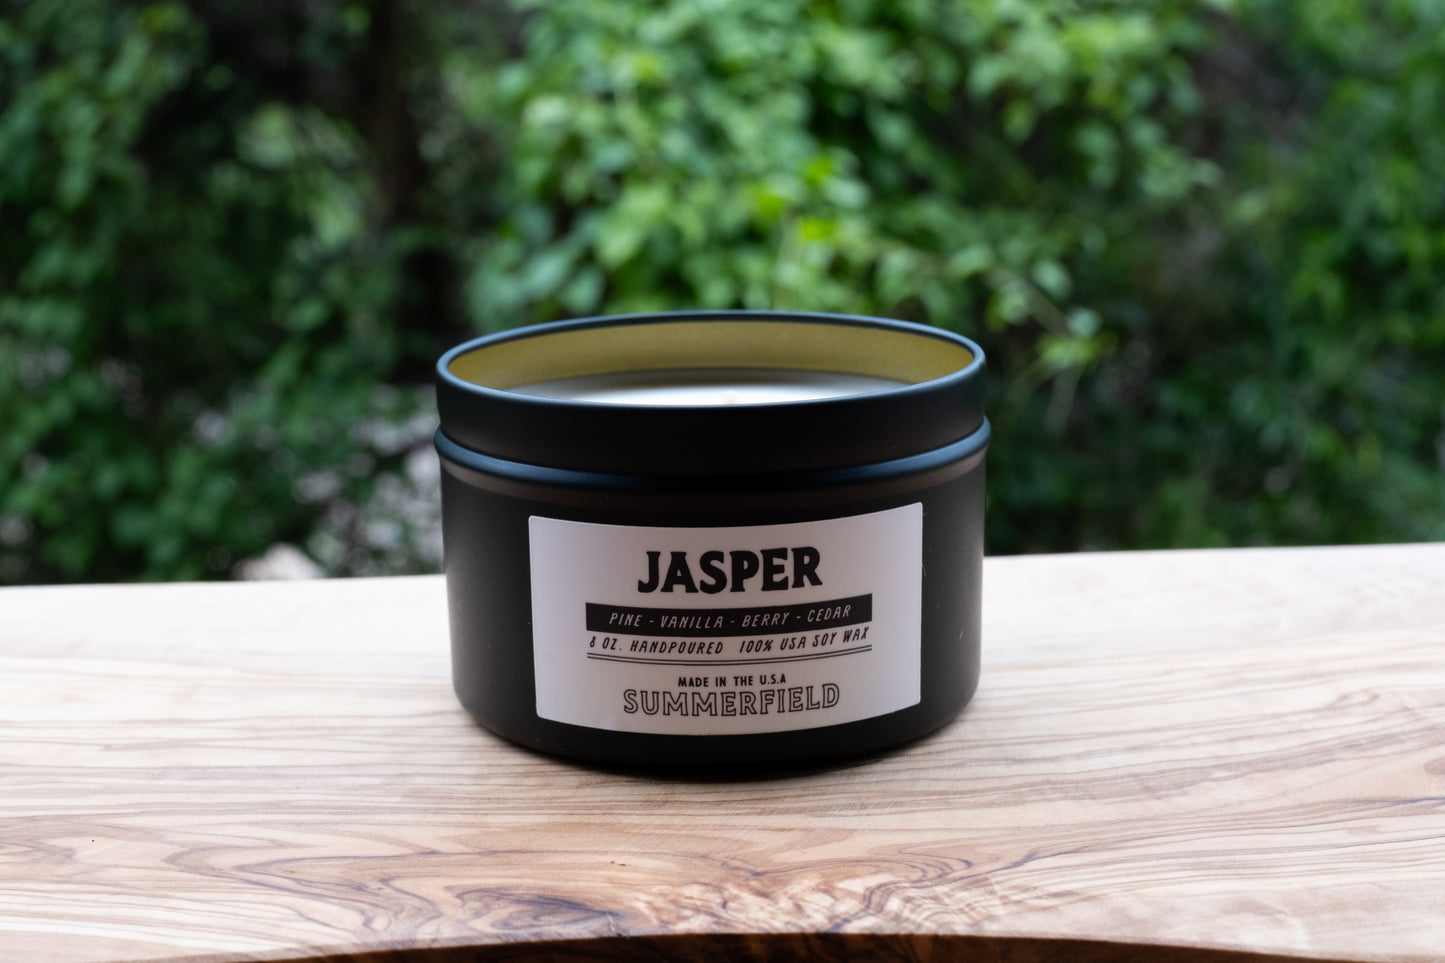 "Jasper" Soy Wax Candle